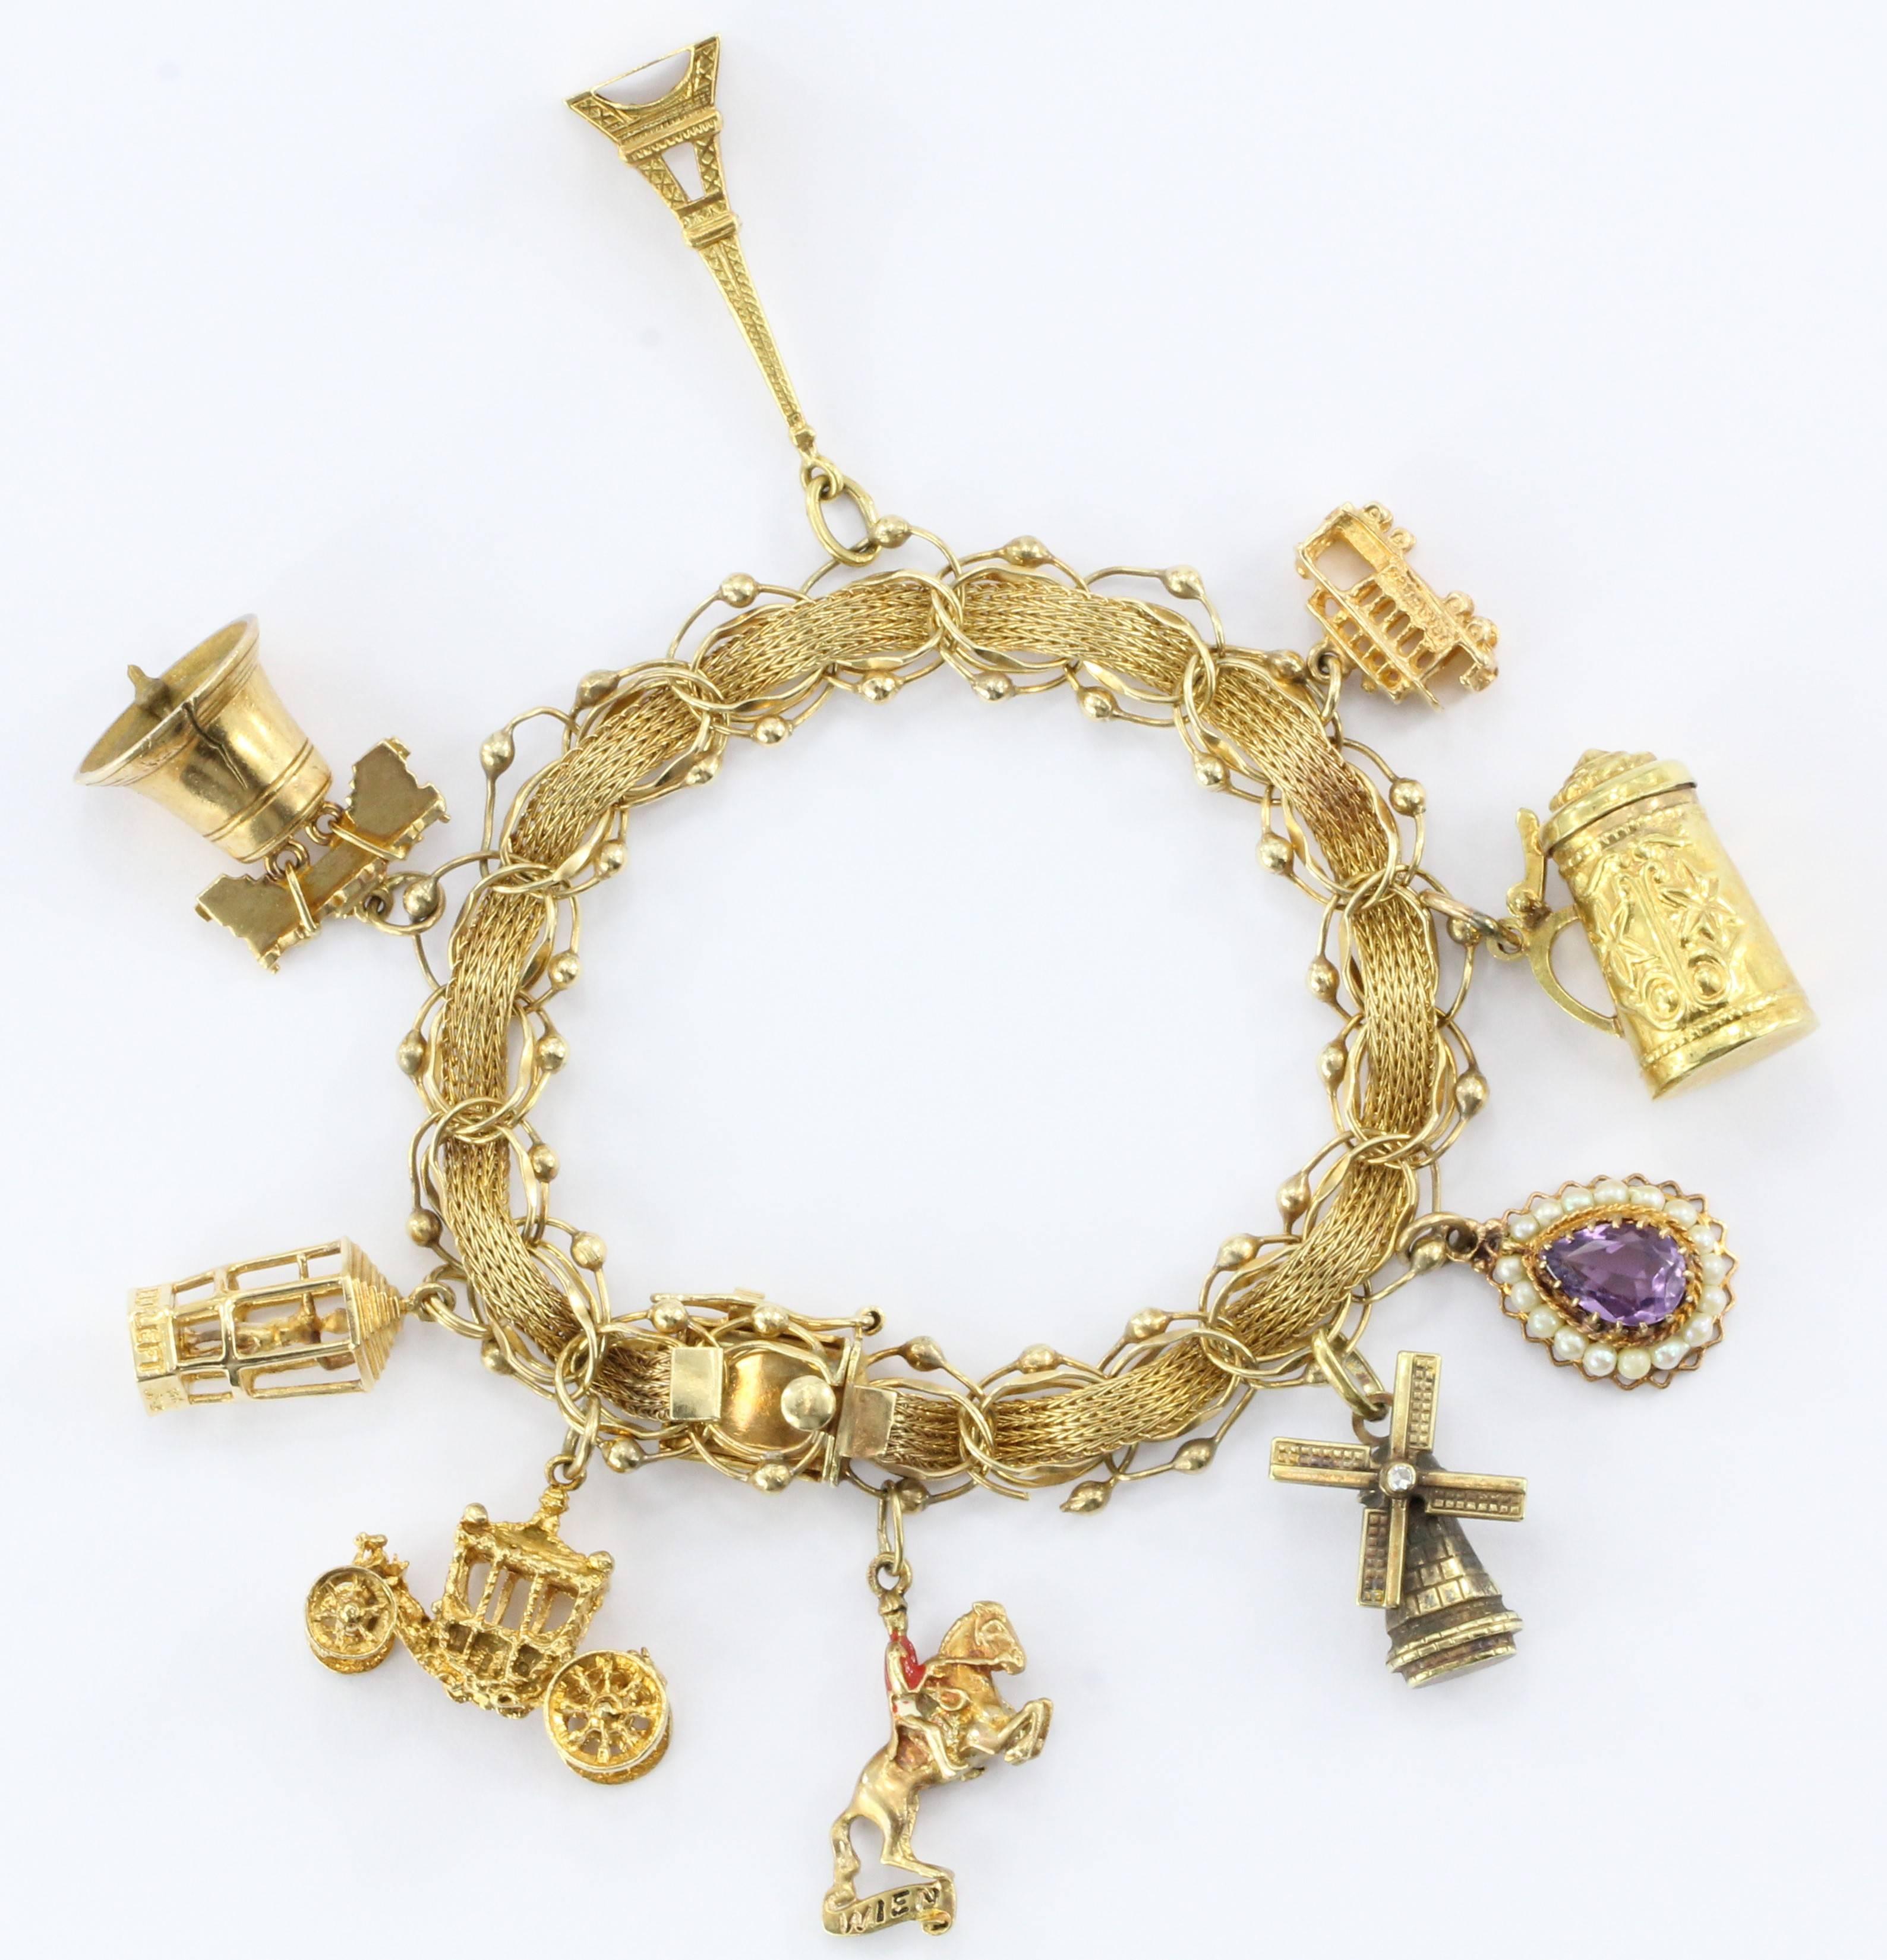 Gold World Traveler Charm Bracelet w/ 9 Charms c.1970